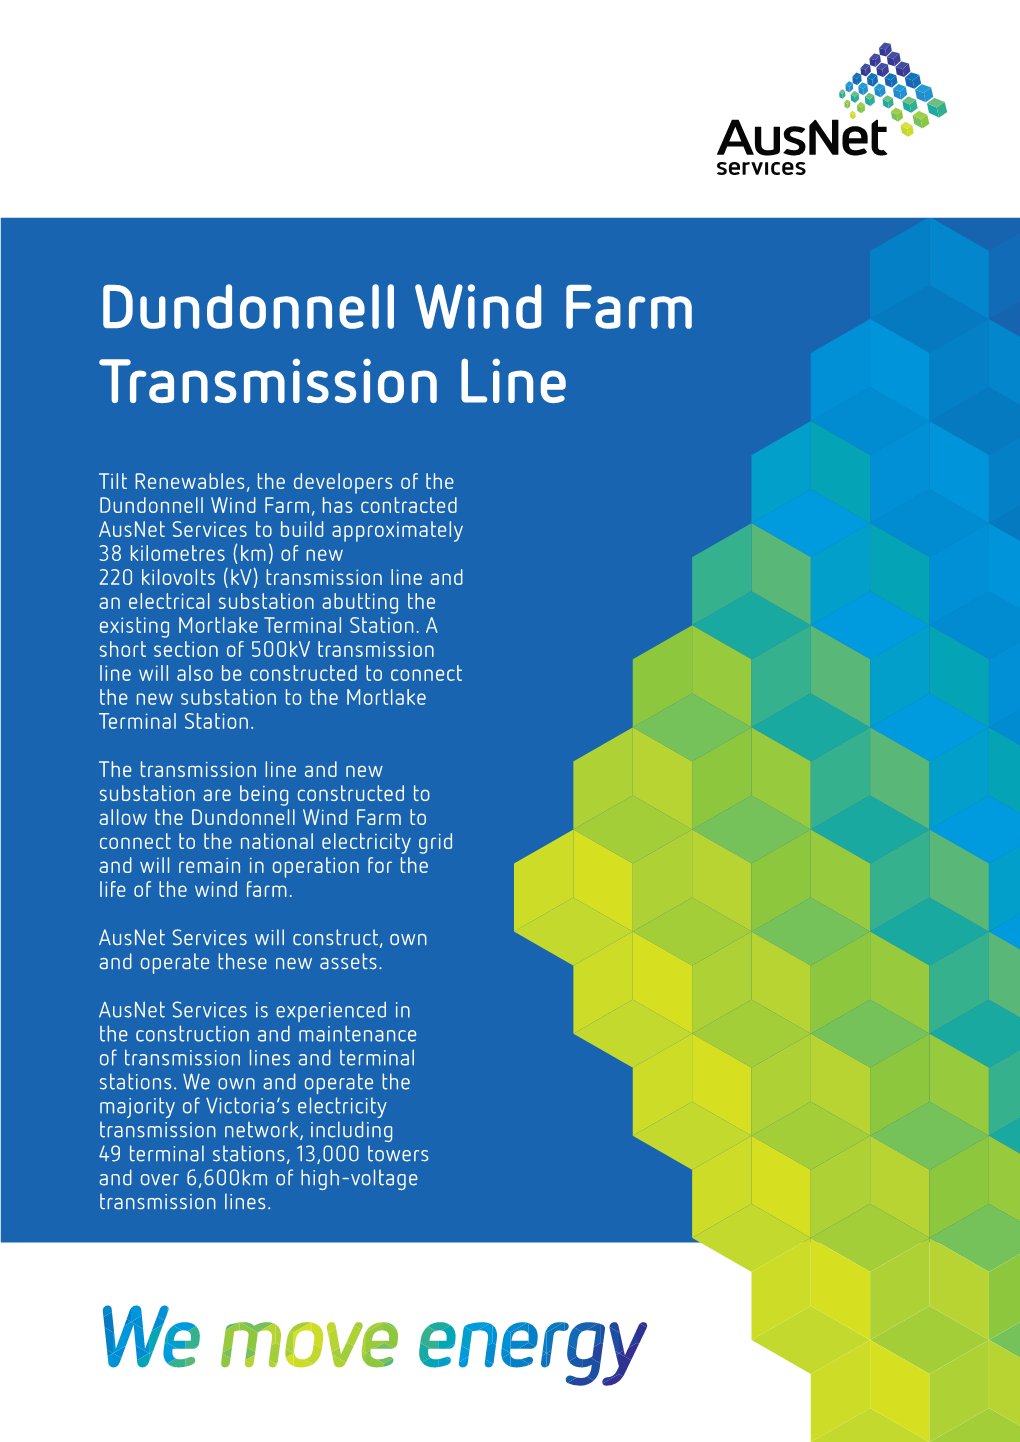 Dundonnell Wind Farm Transmission Line